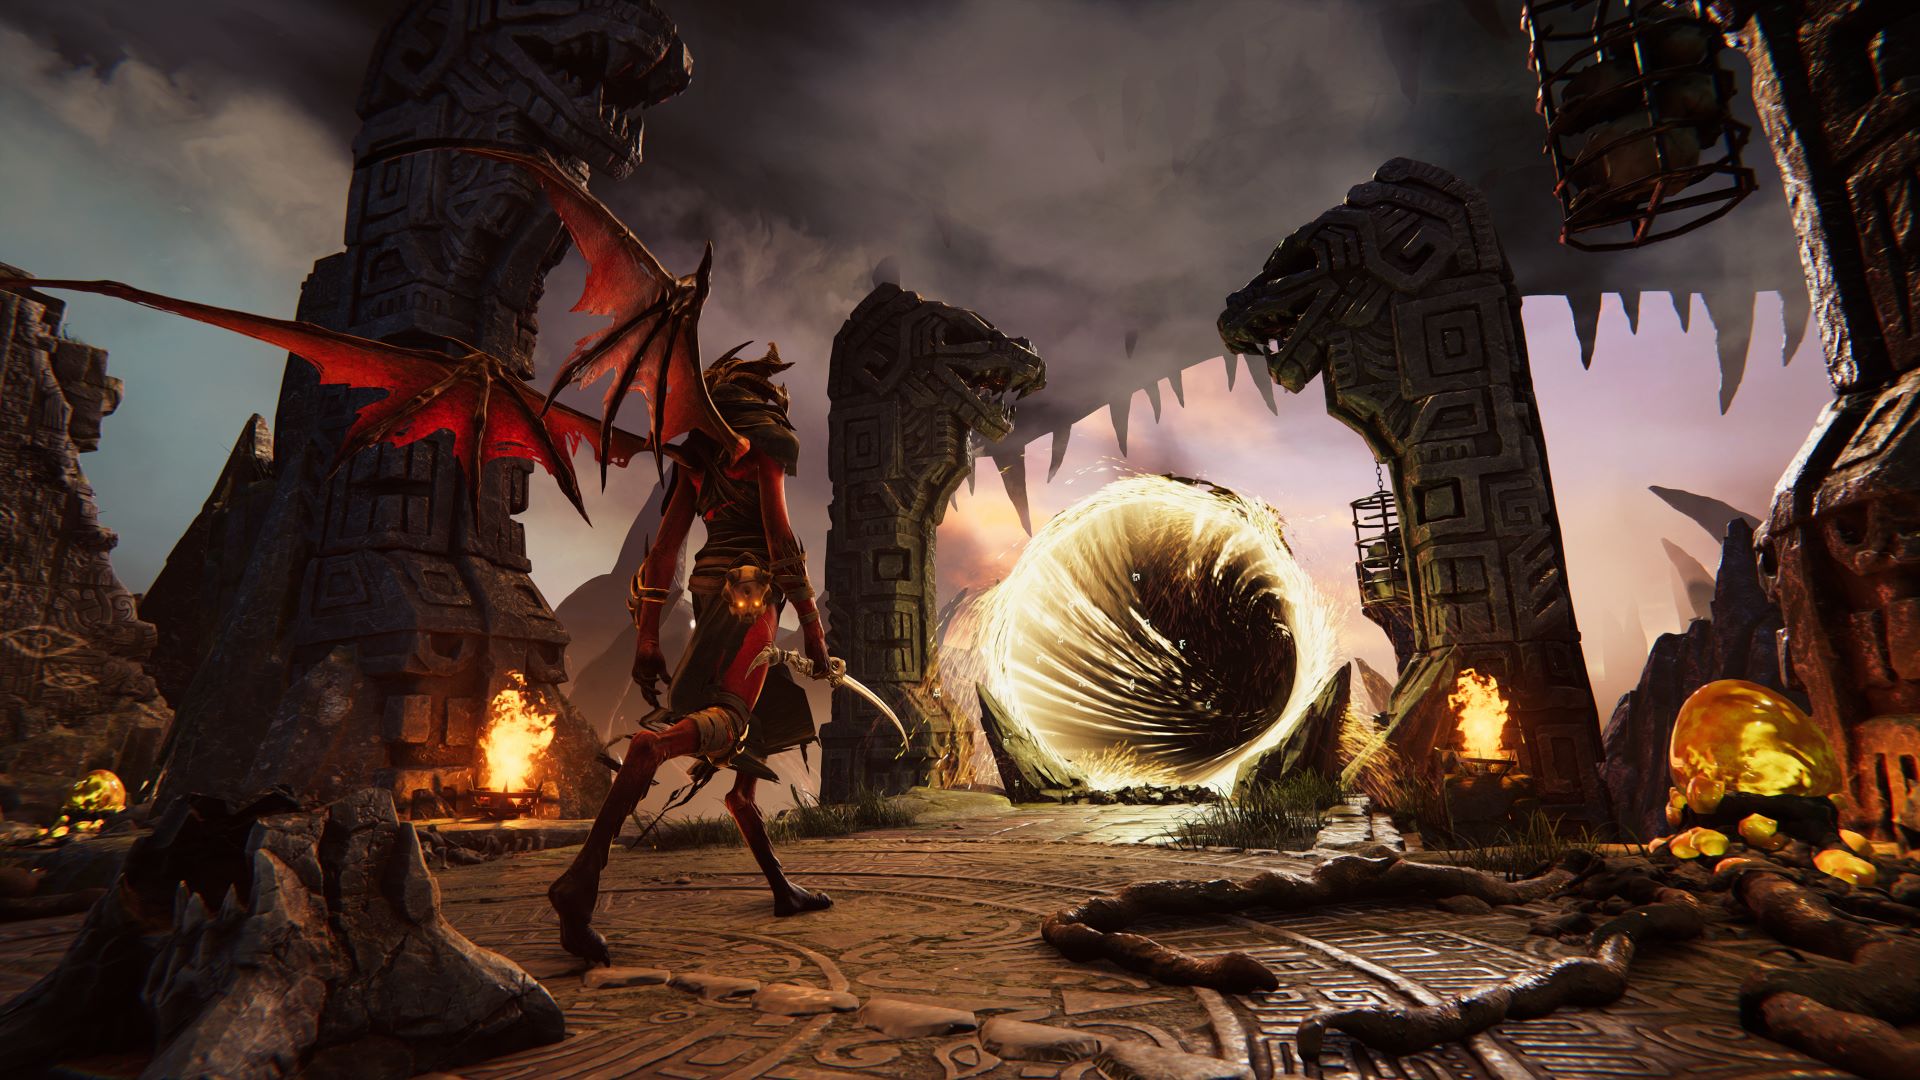 Return to Hell in the Metal: Hellsinger – Dream of the Beast DLC